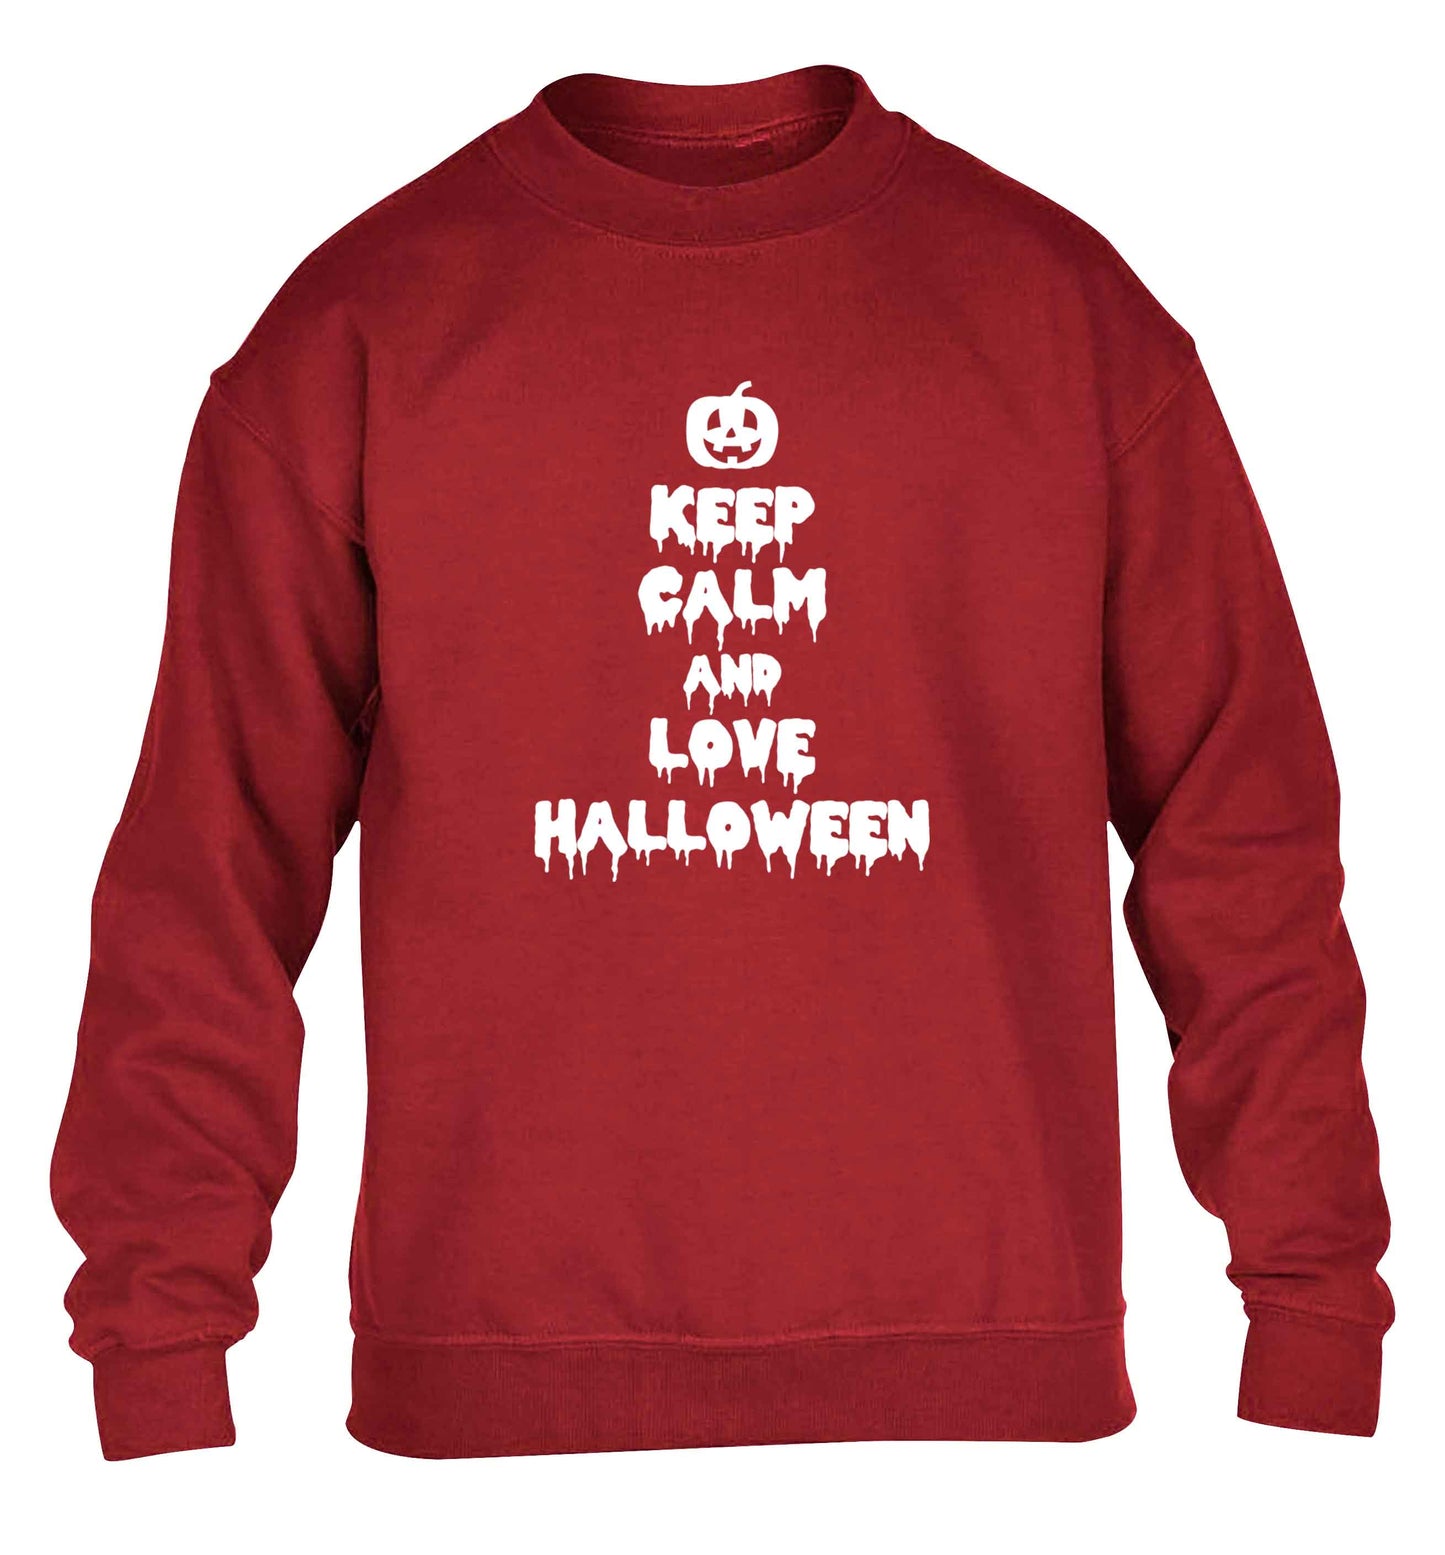 Keep calm and love halloween children's grey sweater 12-13 Years